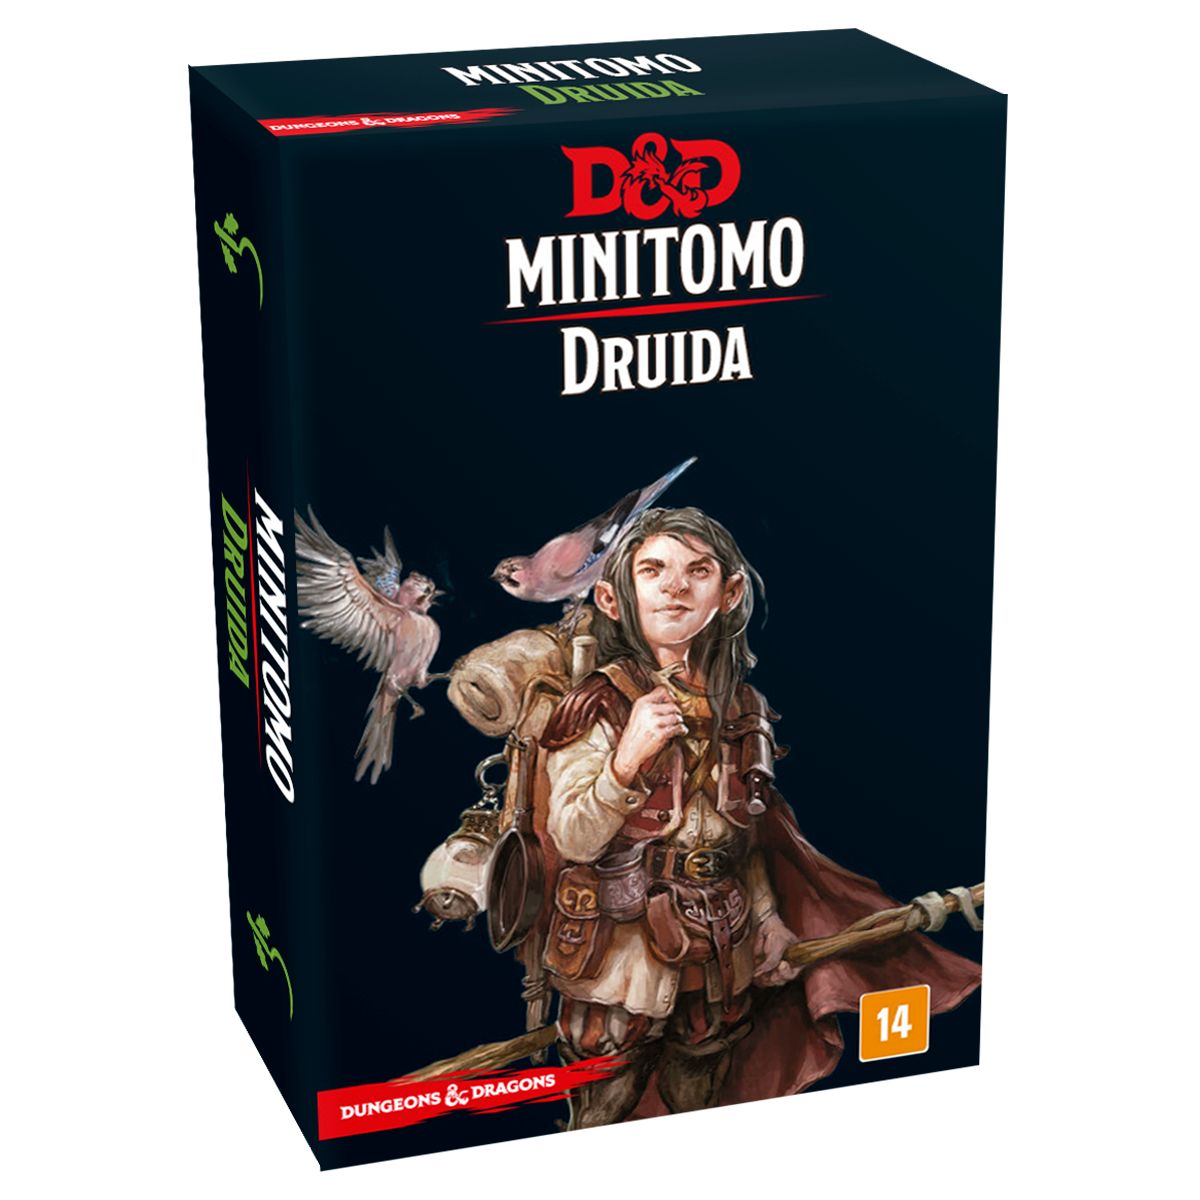 Dungeons and Dragons Minitomo Druida Deck RPG